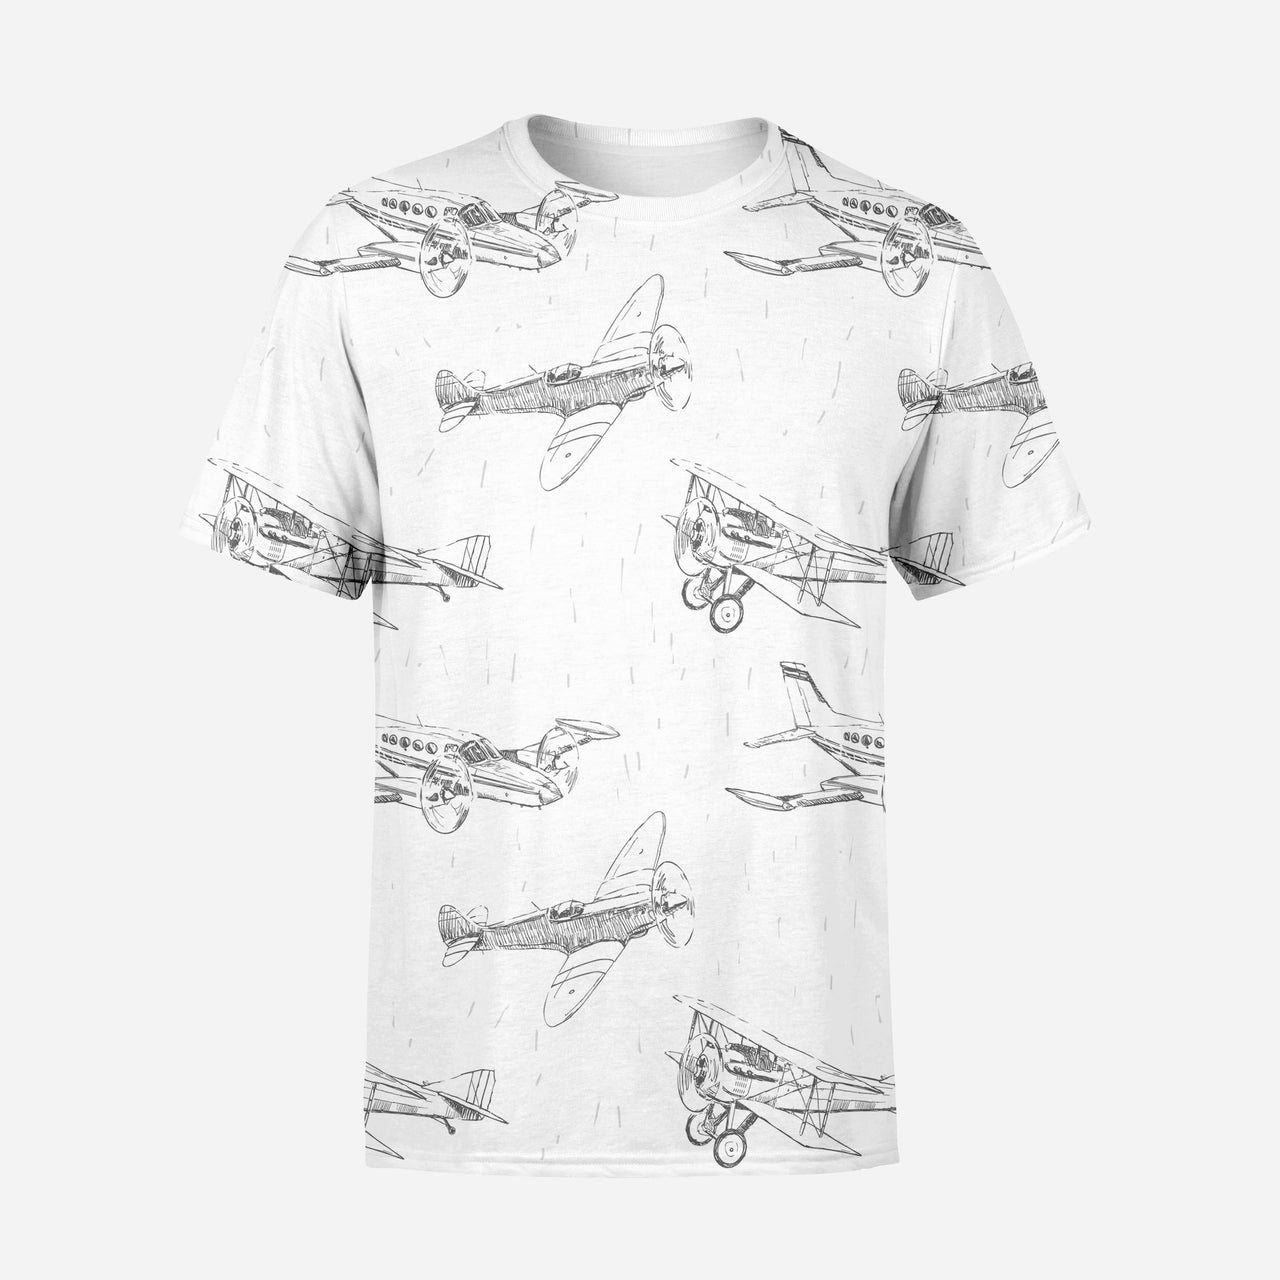 Super Aircrafts Printed 3D T-Shirts